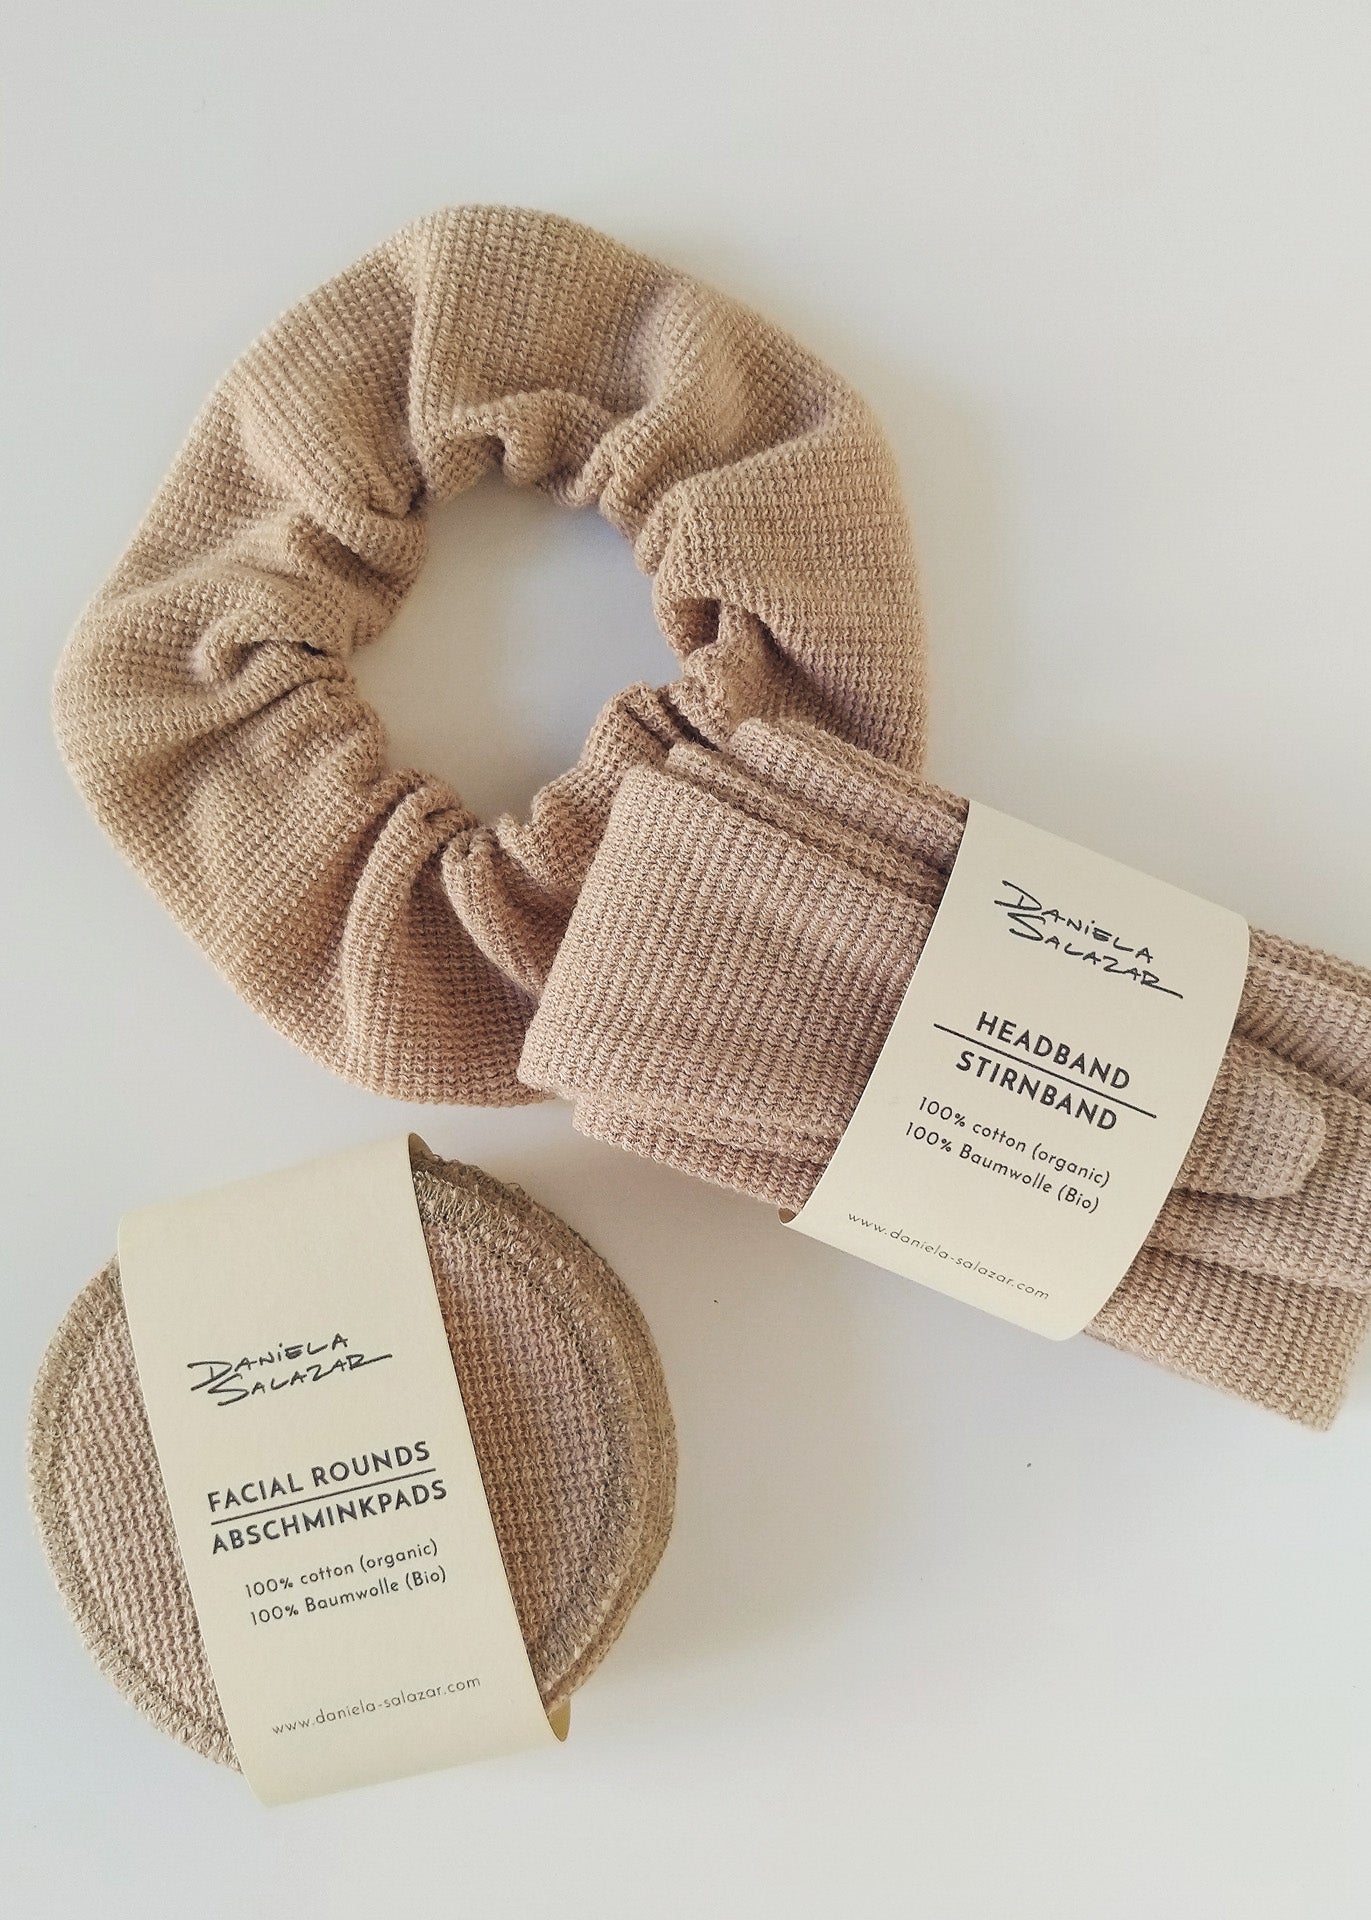 Home spa Gift Set - Gingham/Brown - 100% Cotton (organic) / 100 % Baumwolle (Bio)